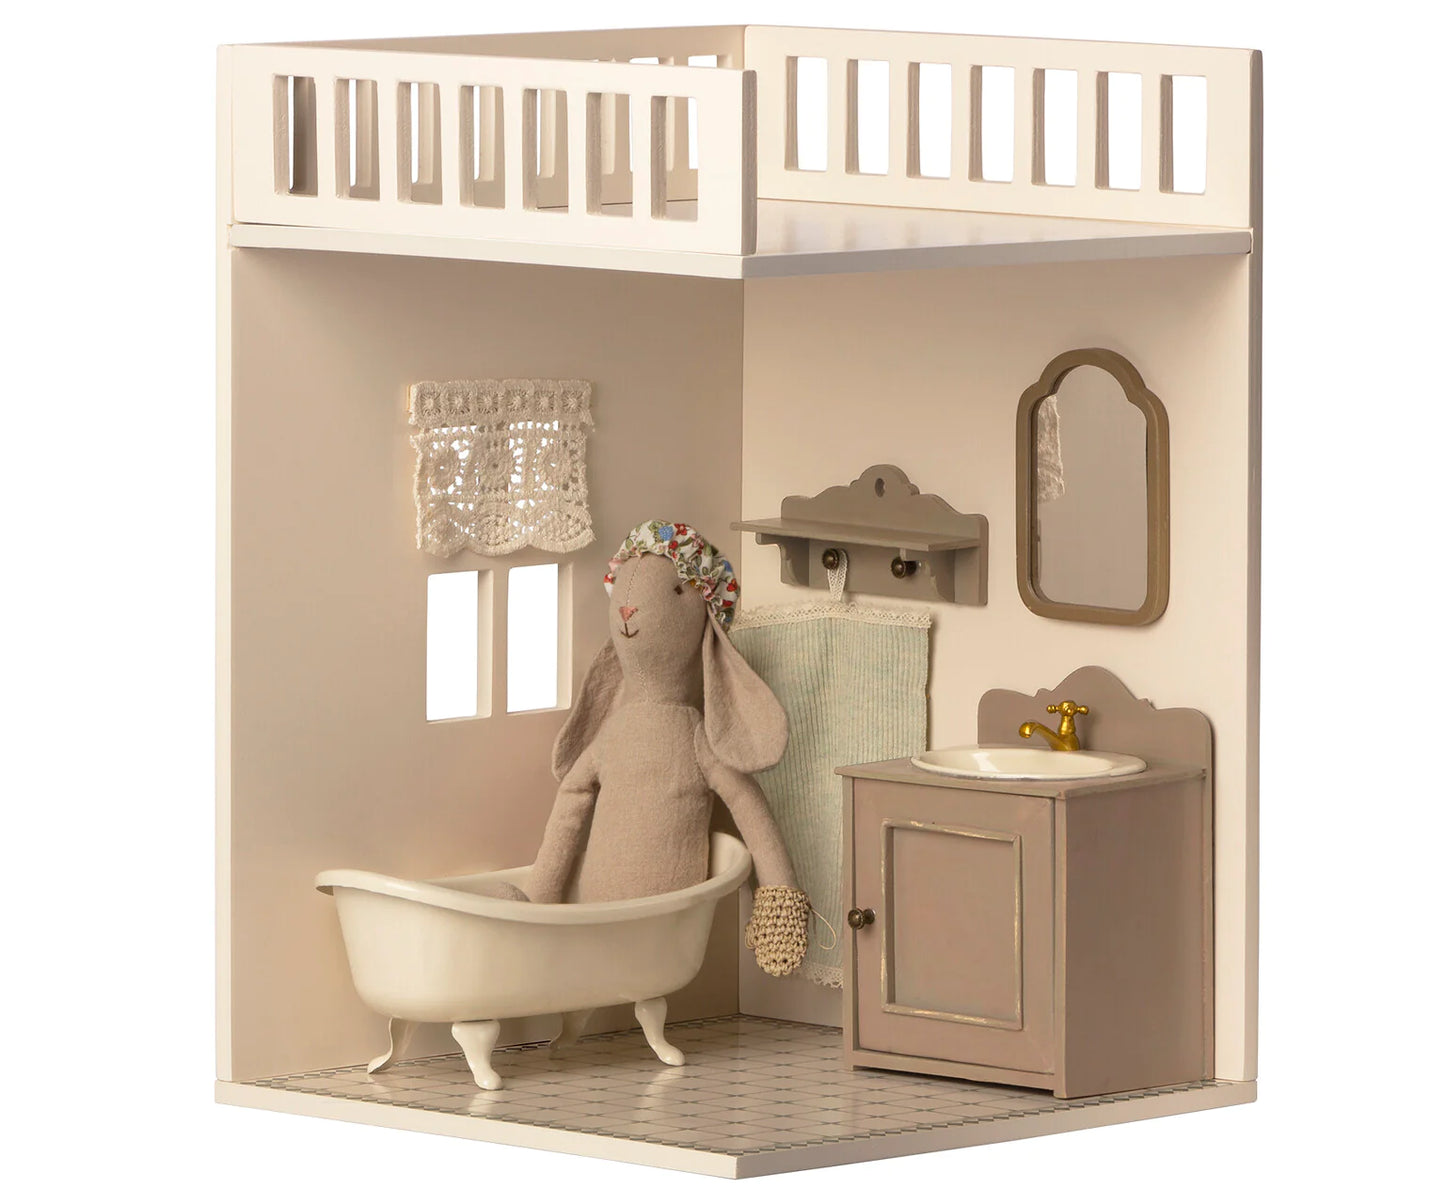 House of Miniature Bathroom - Maileg